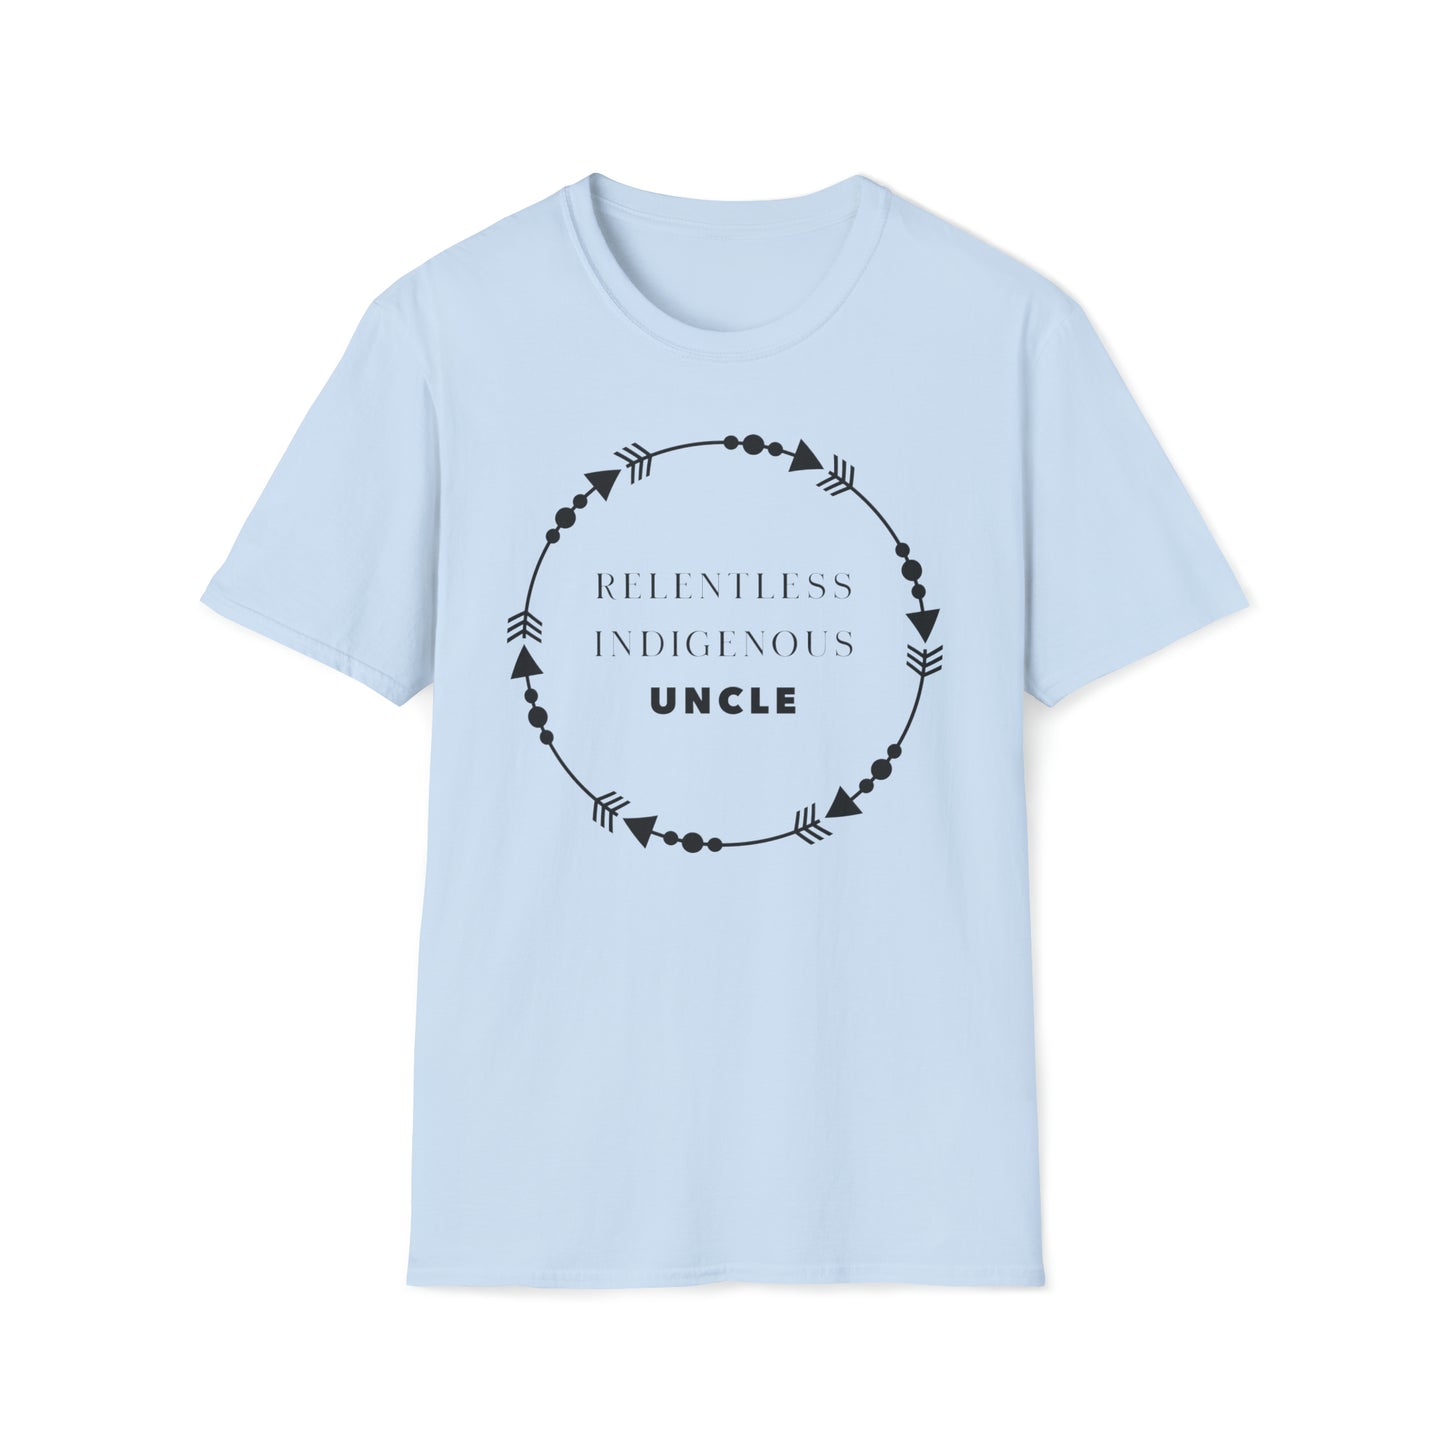 Relentless Indigenous Uncle // T-Shirt